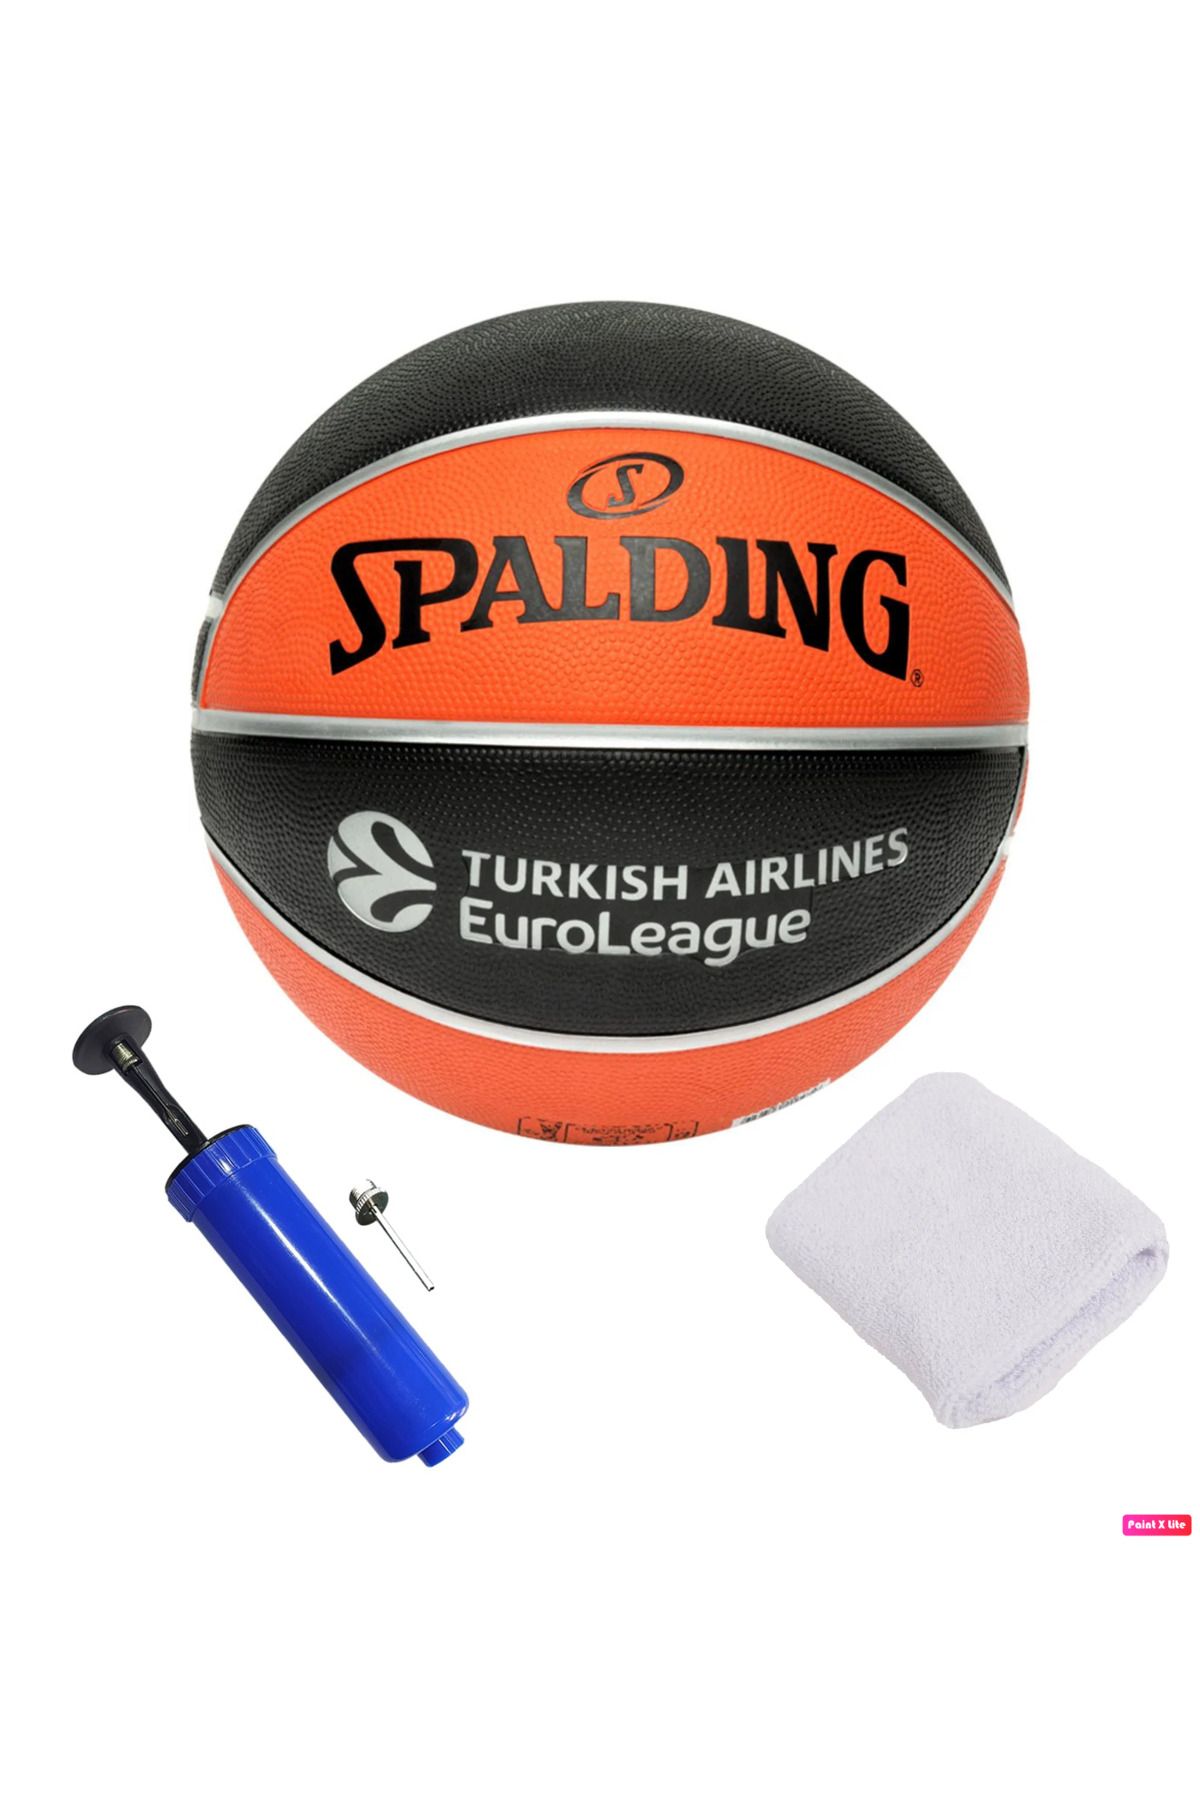 Spalding TF-150 Euroleague Kauçuk Antrenman Basketbol No 7 Outdoor Maç Topu 600 gr + Pompa + Havlu Bileklik